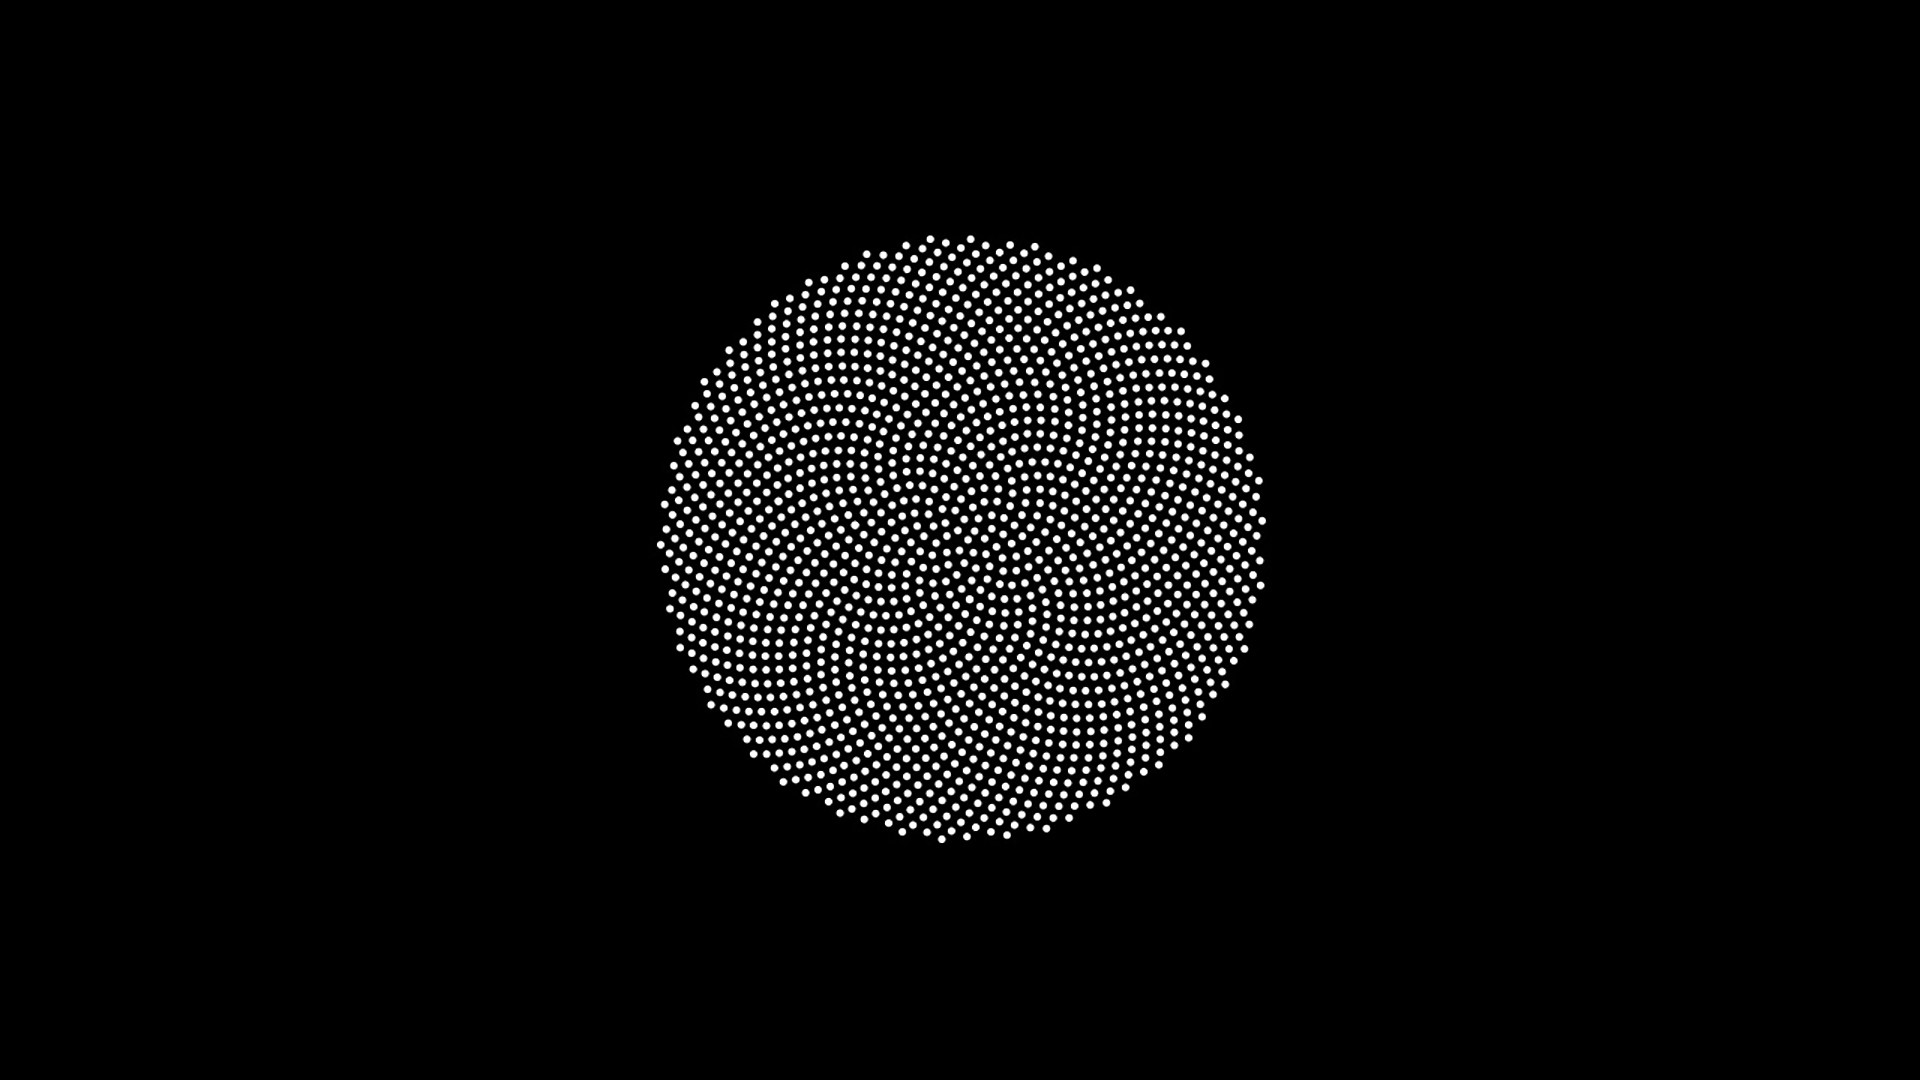 General 1920x1080 minimalism golden ratio Fibonacci sequence digital art black background